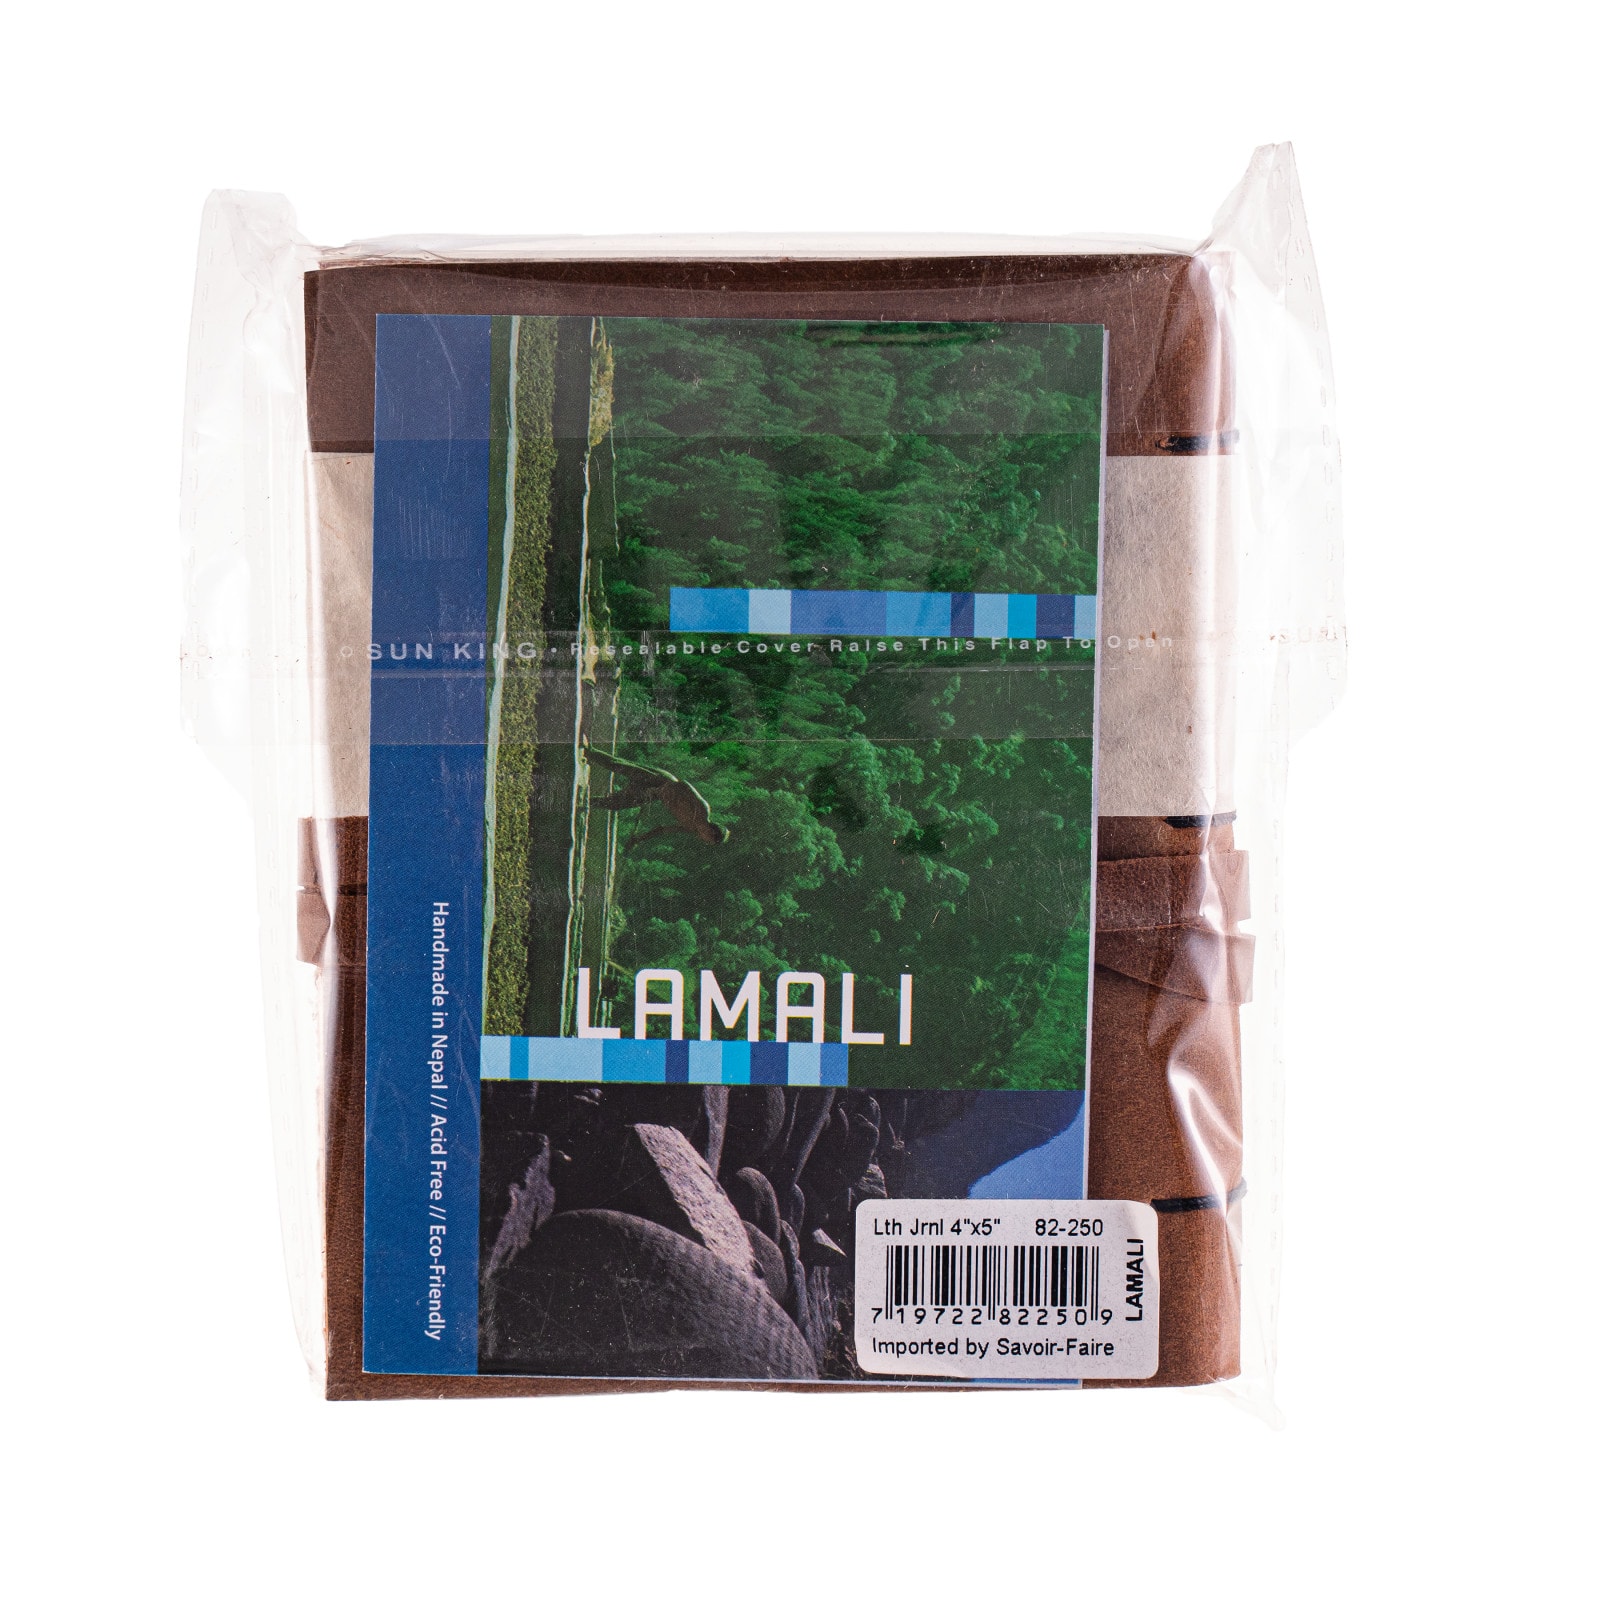 Lama Li Leather Journal, 4&#x22; x 5&#x22;